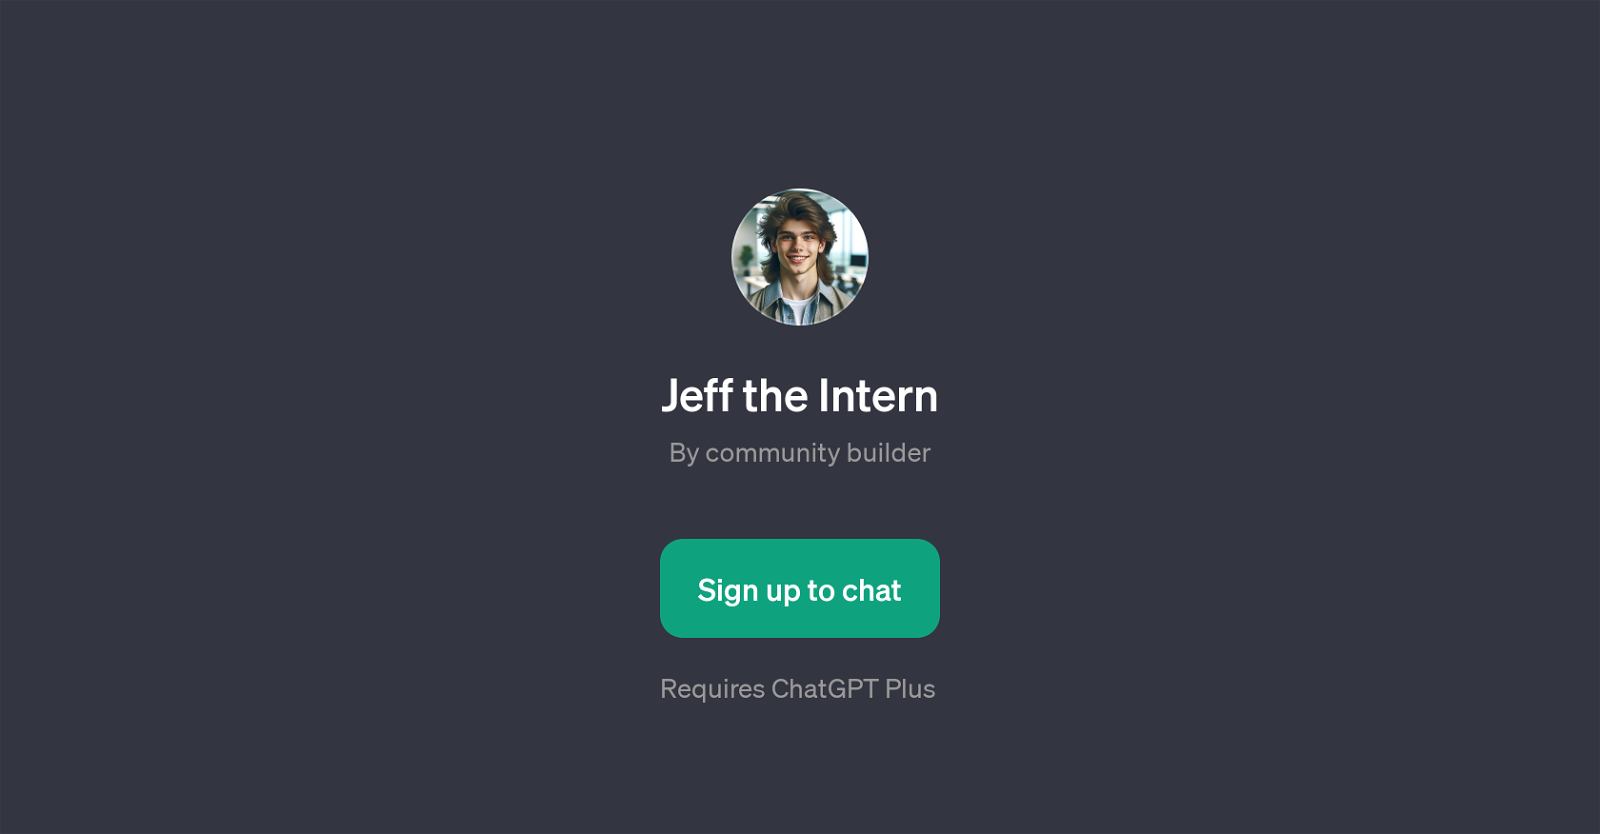 Jeff the Intern website